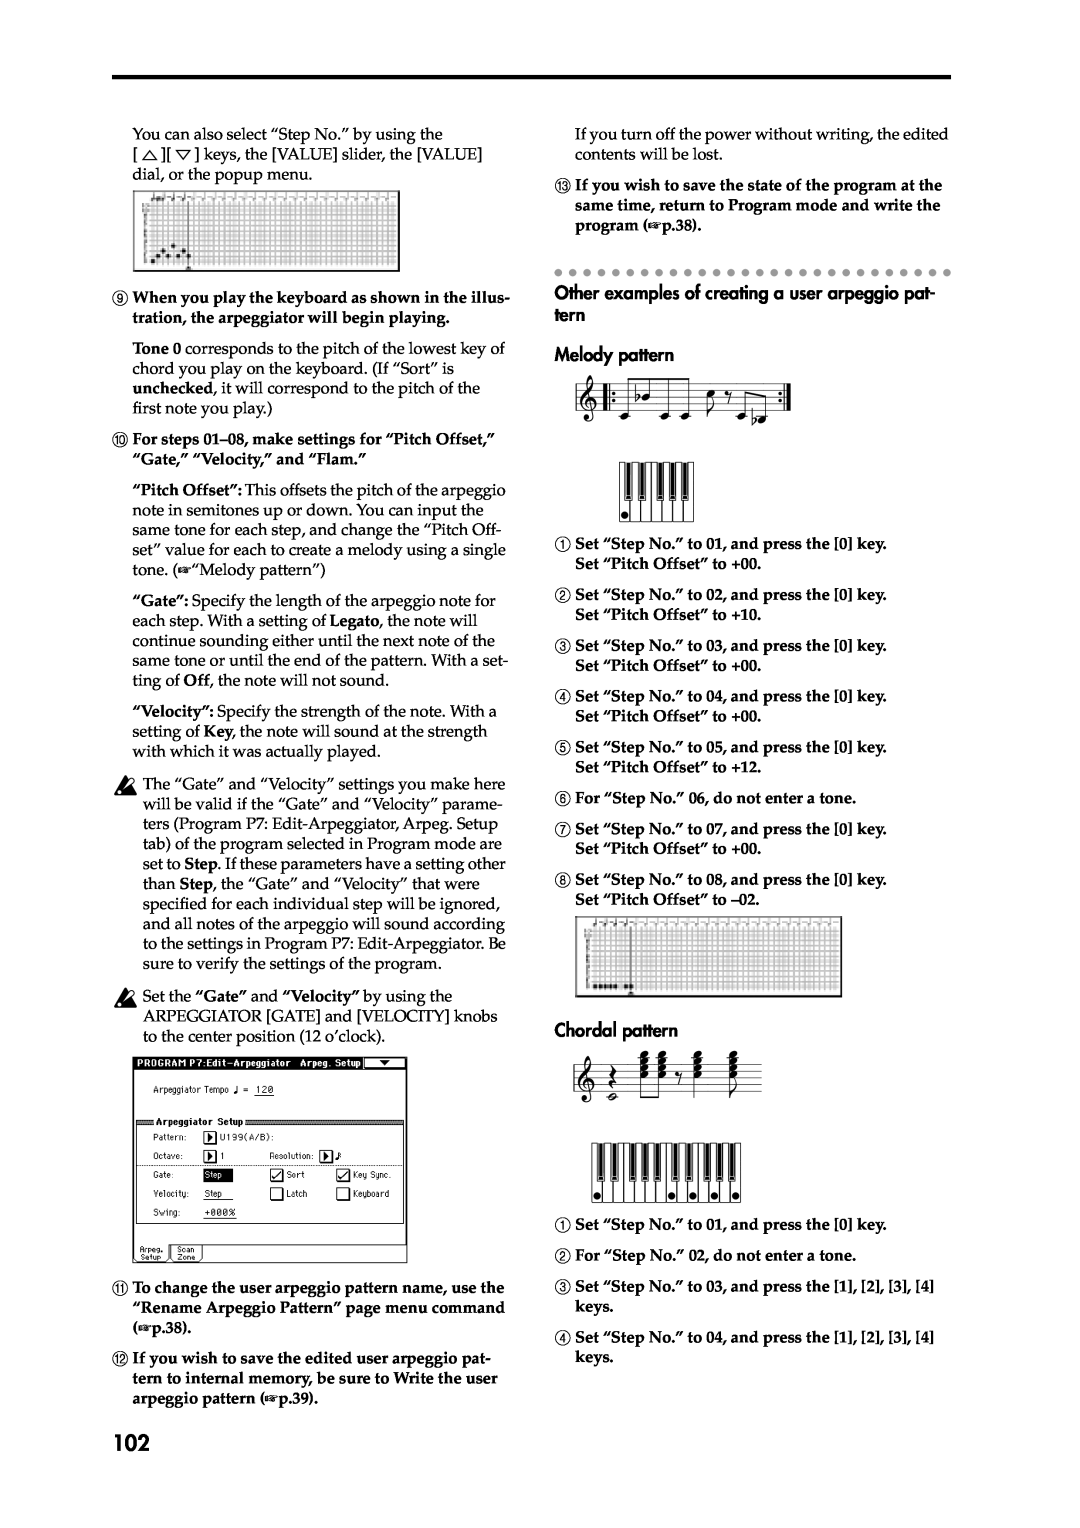 Korg Speaker System owner manual Melody pattern, Chordal pattern 